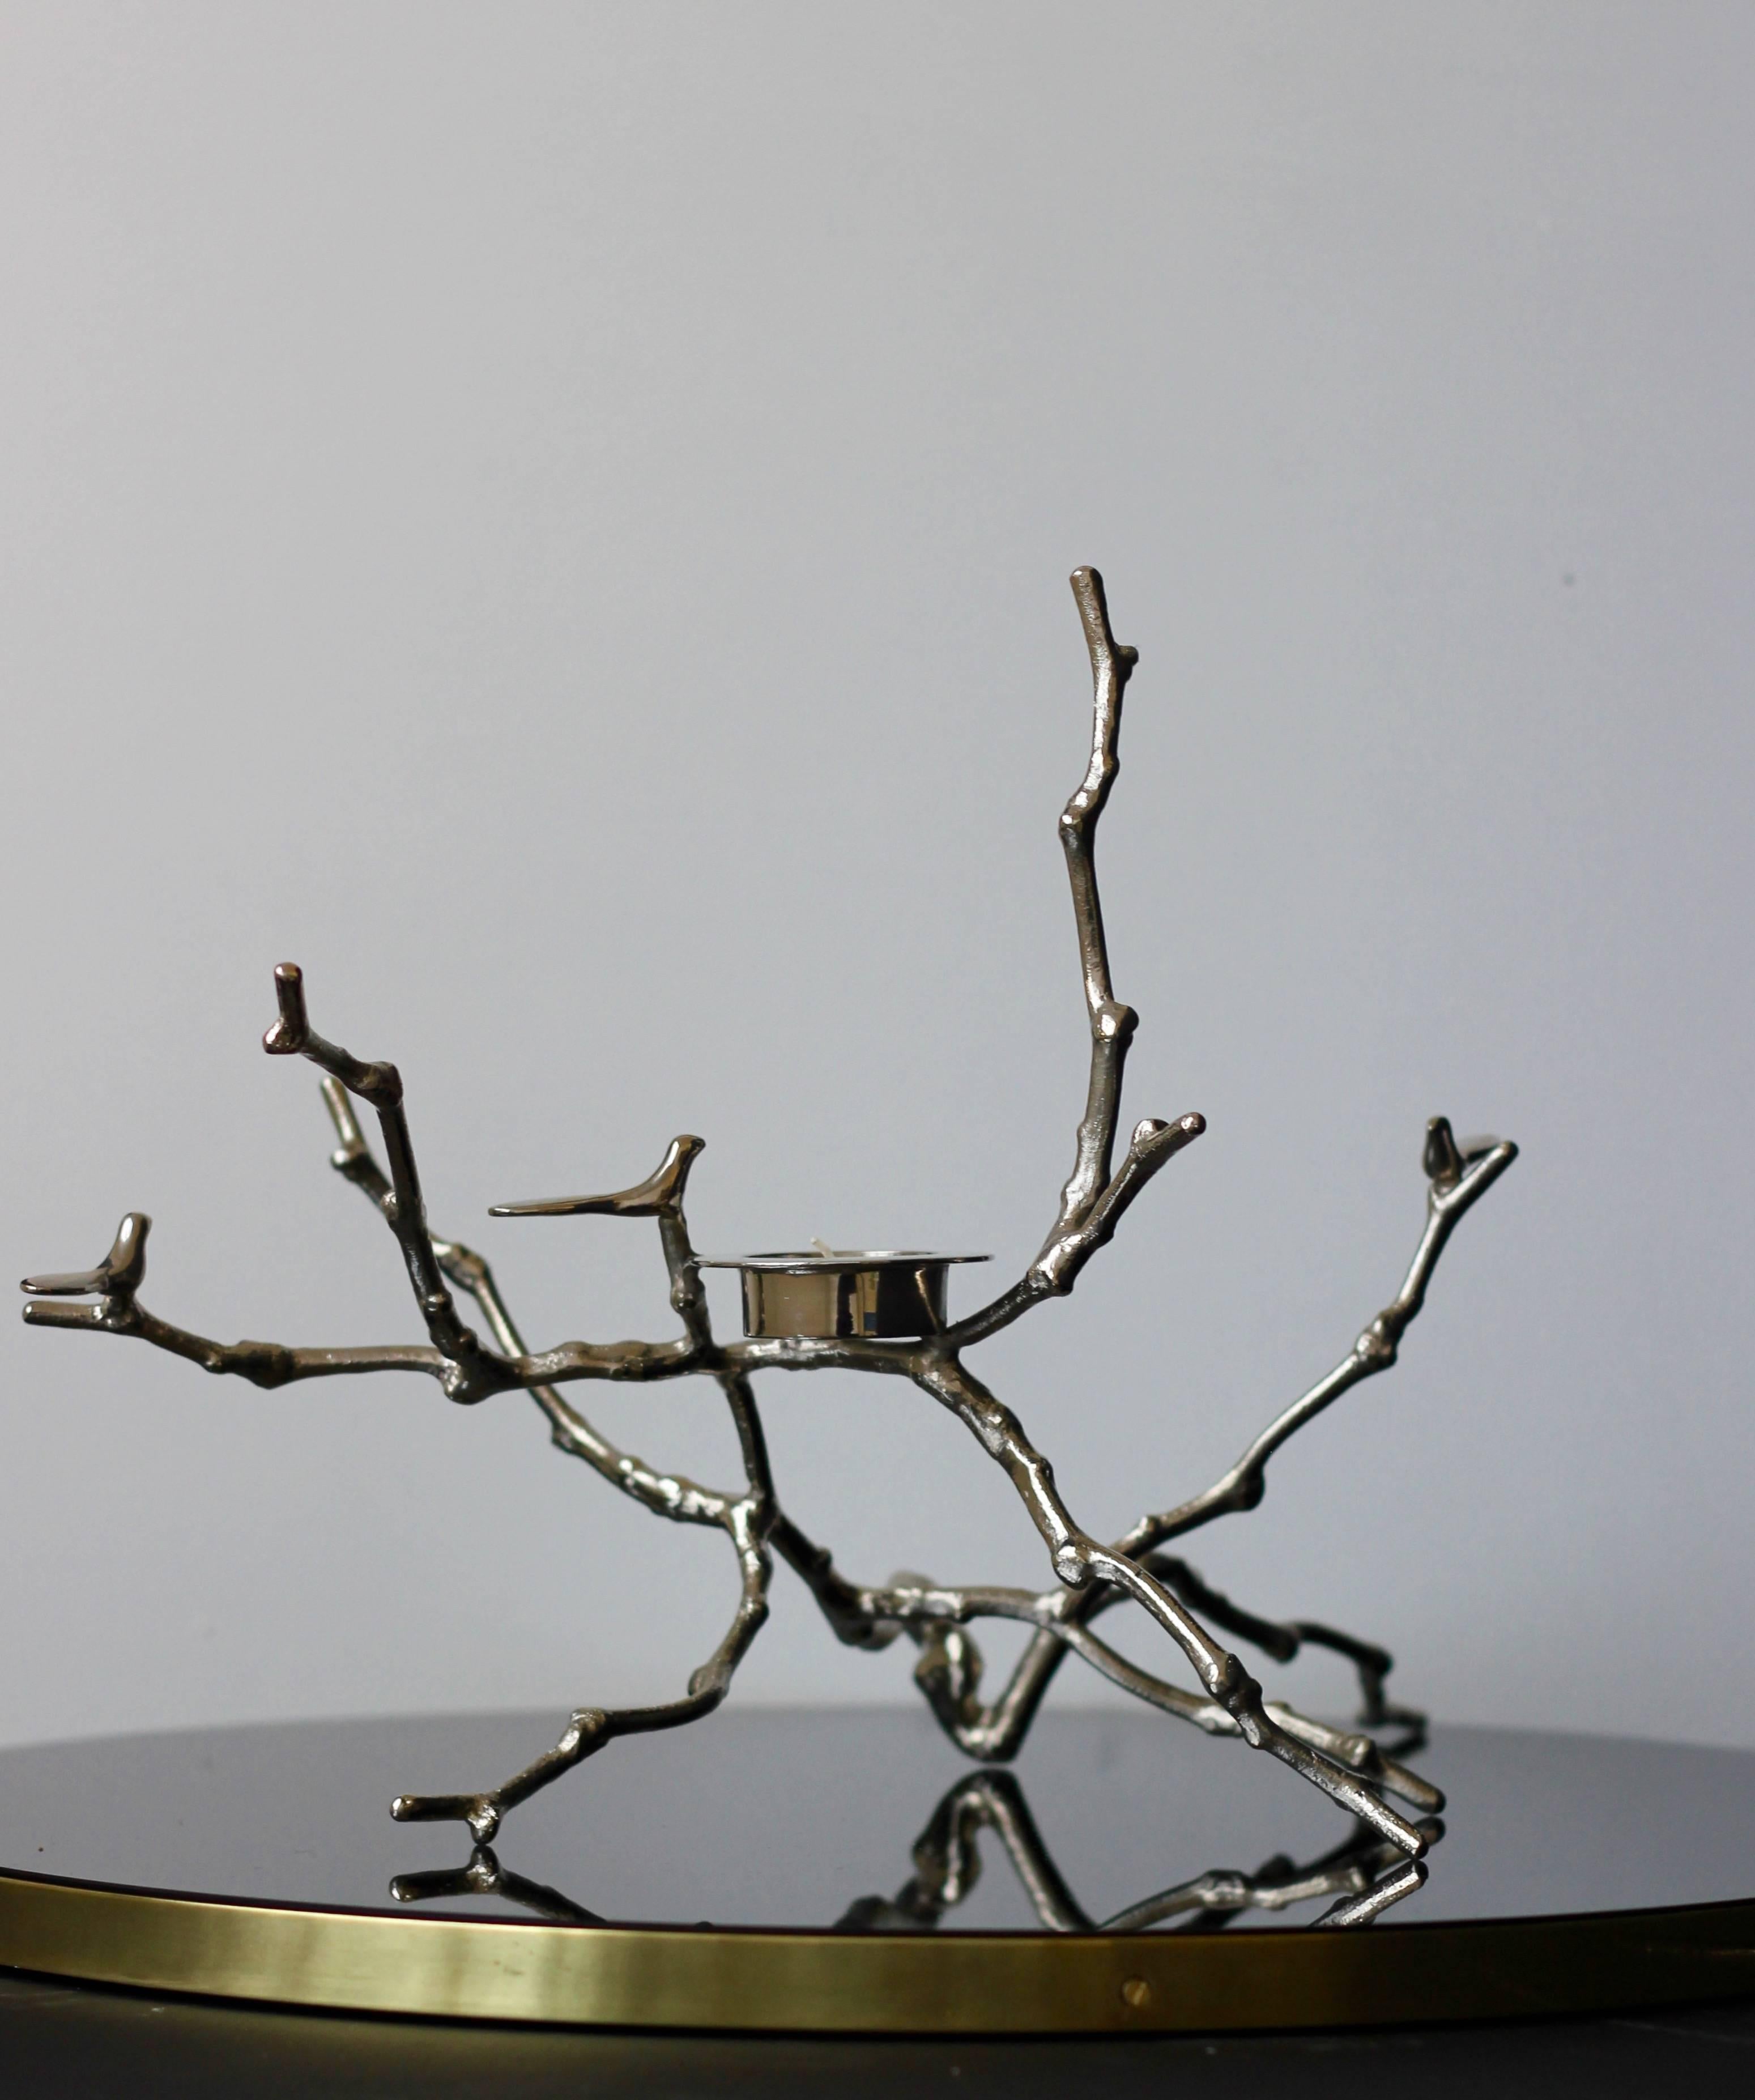 Nickel-Plated Cast Magnolia Twig T-Light Holder, Tall (Organische Moderne)